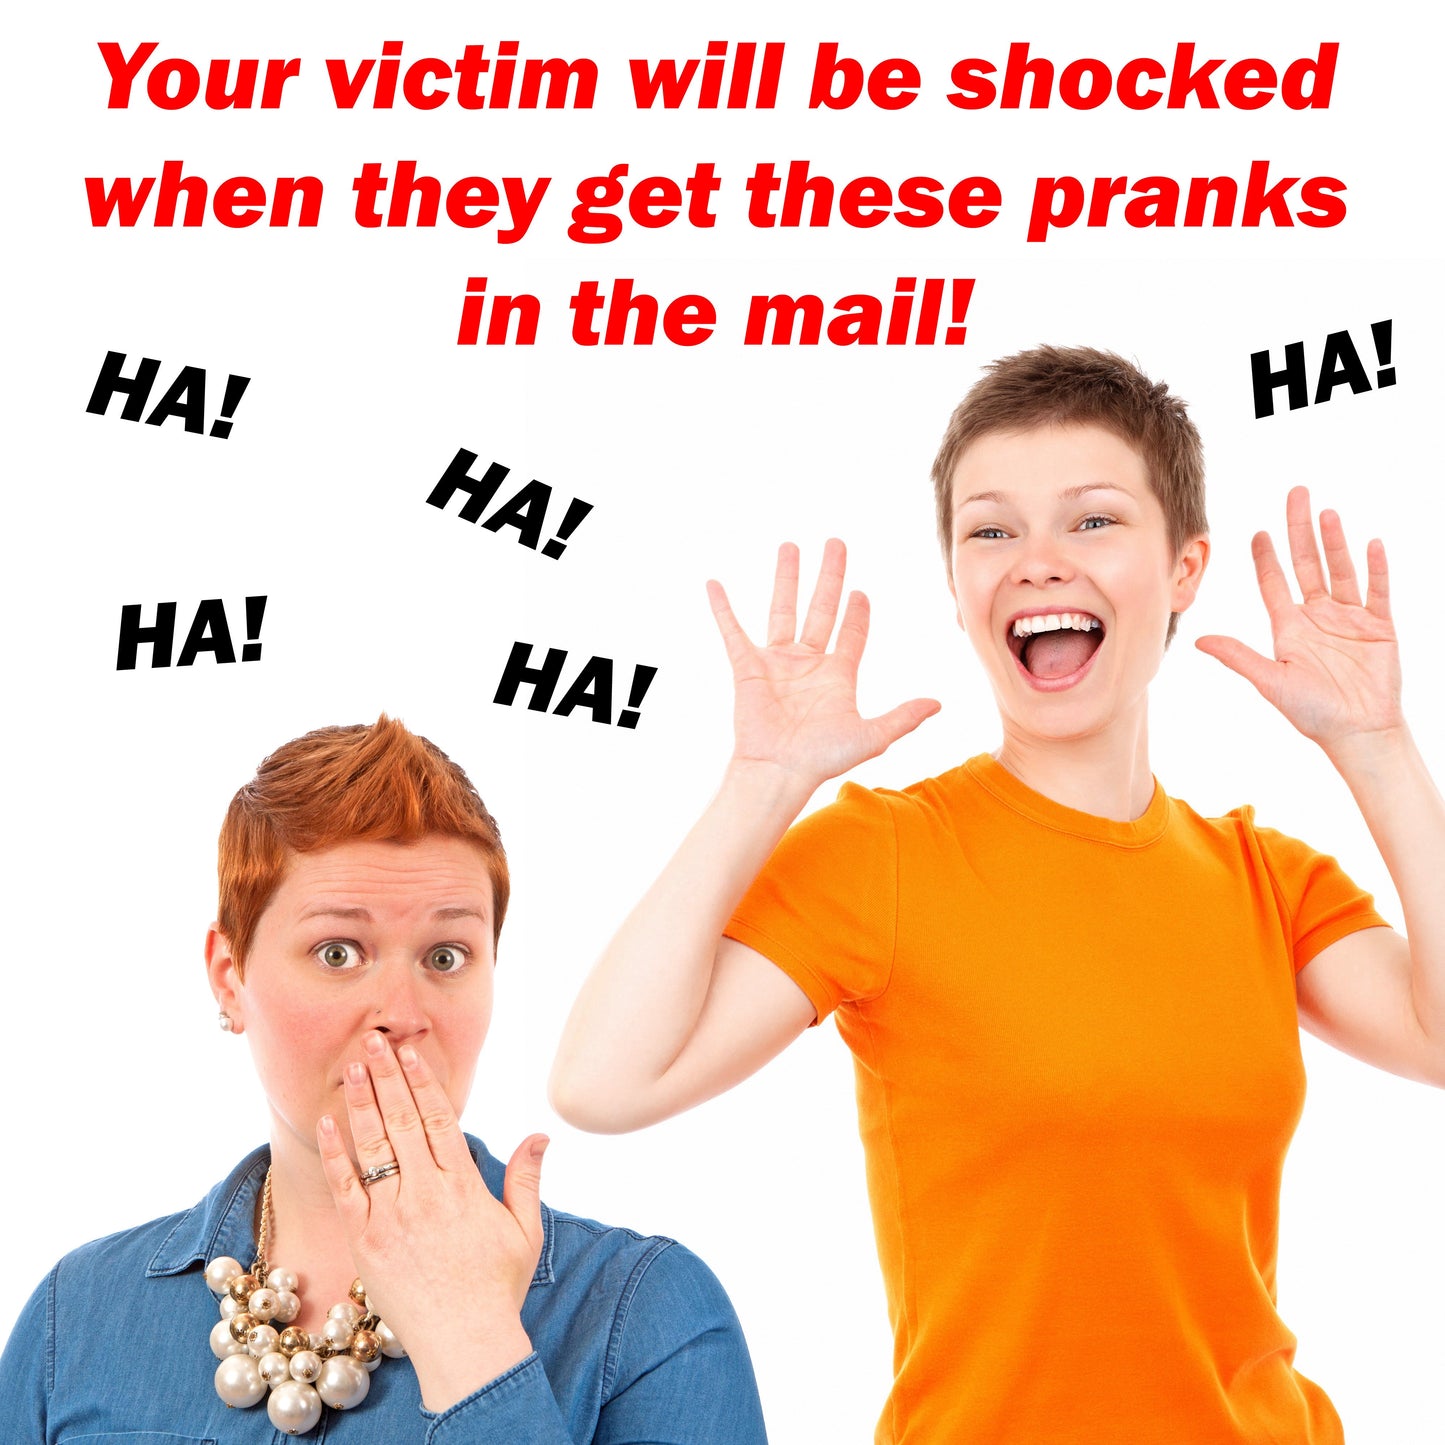 Prank - Tramp Stamp Remover Mailer